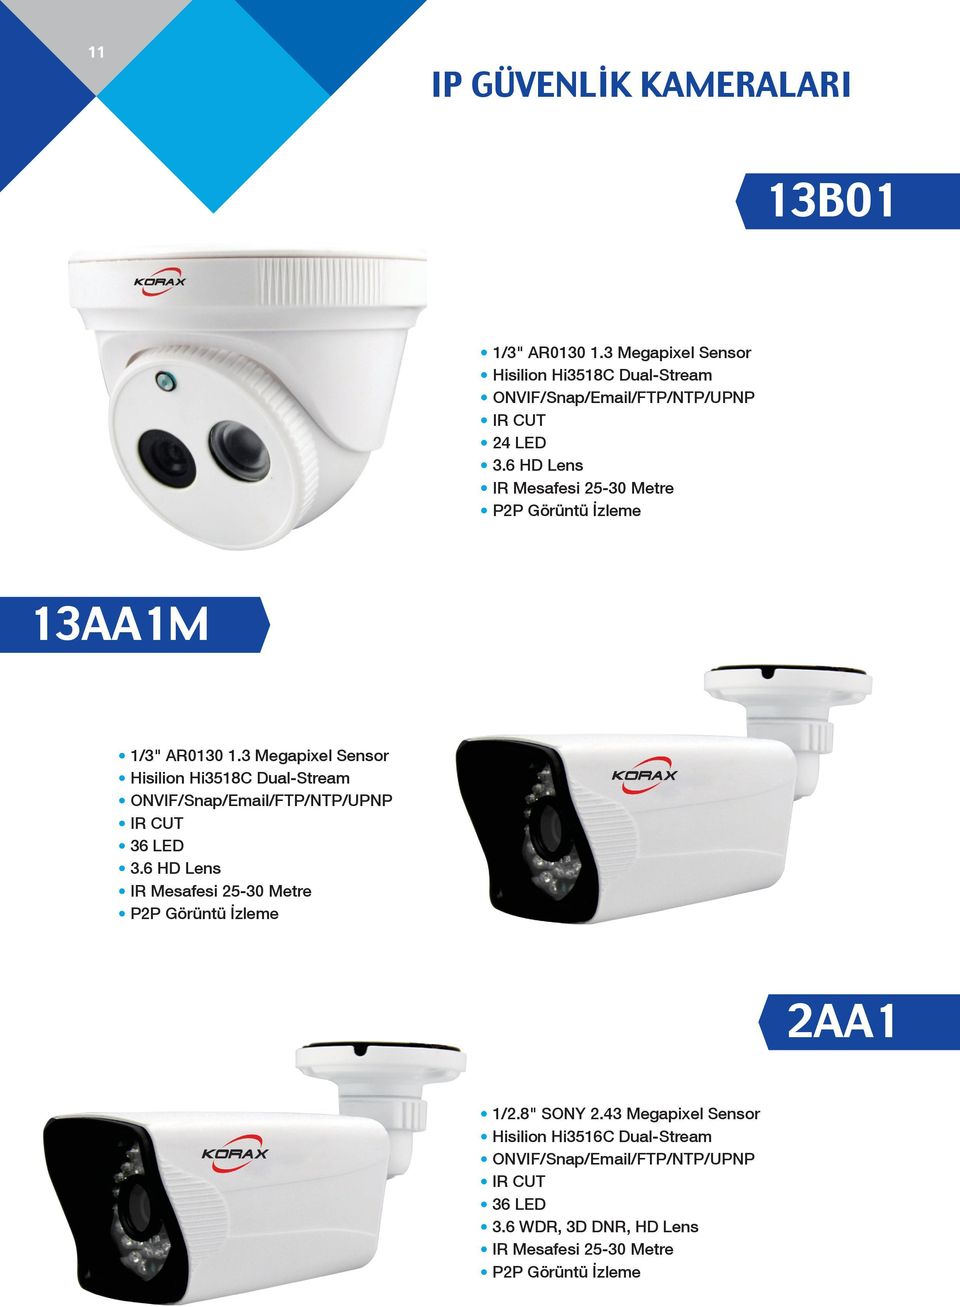 6 HD Lens IR Mesafesi 25-30 Metre P2P Görüntü İzleme 13AA1M 1/3" AR0130 1.